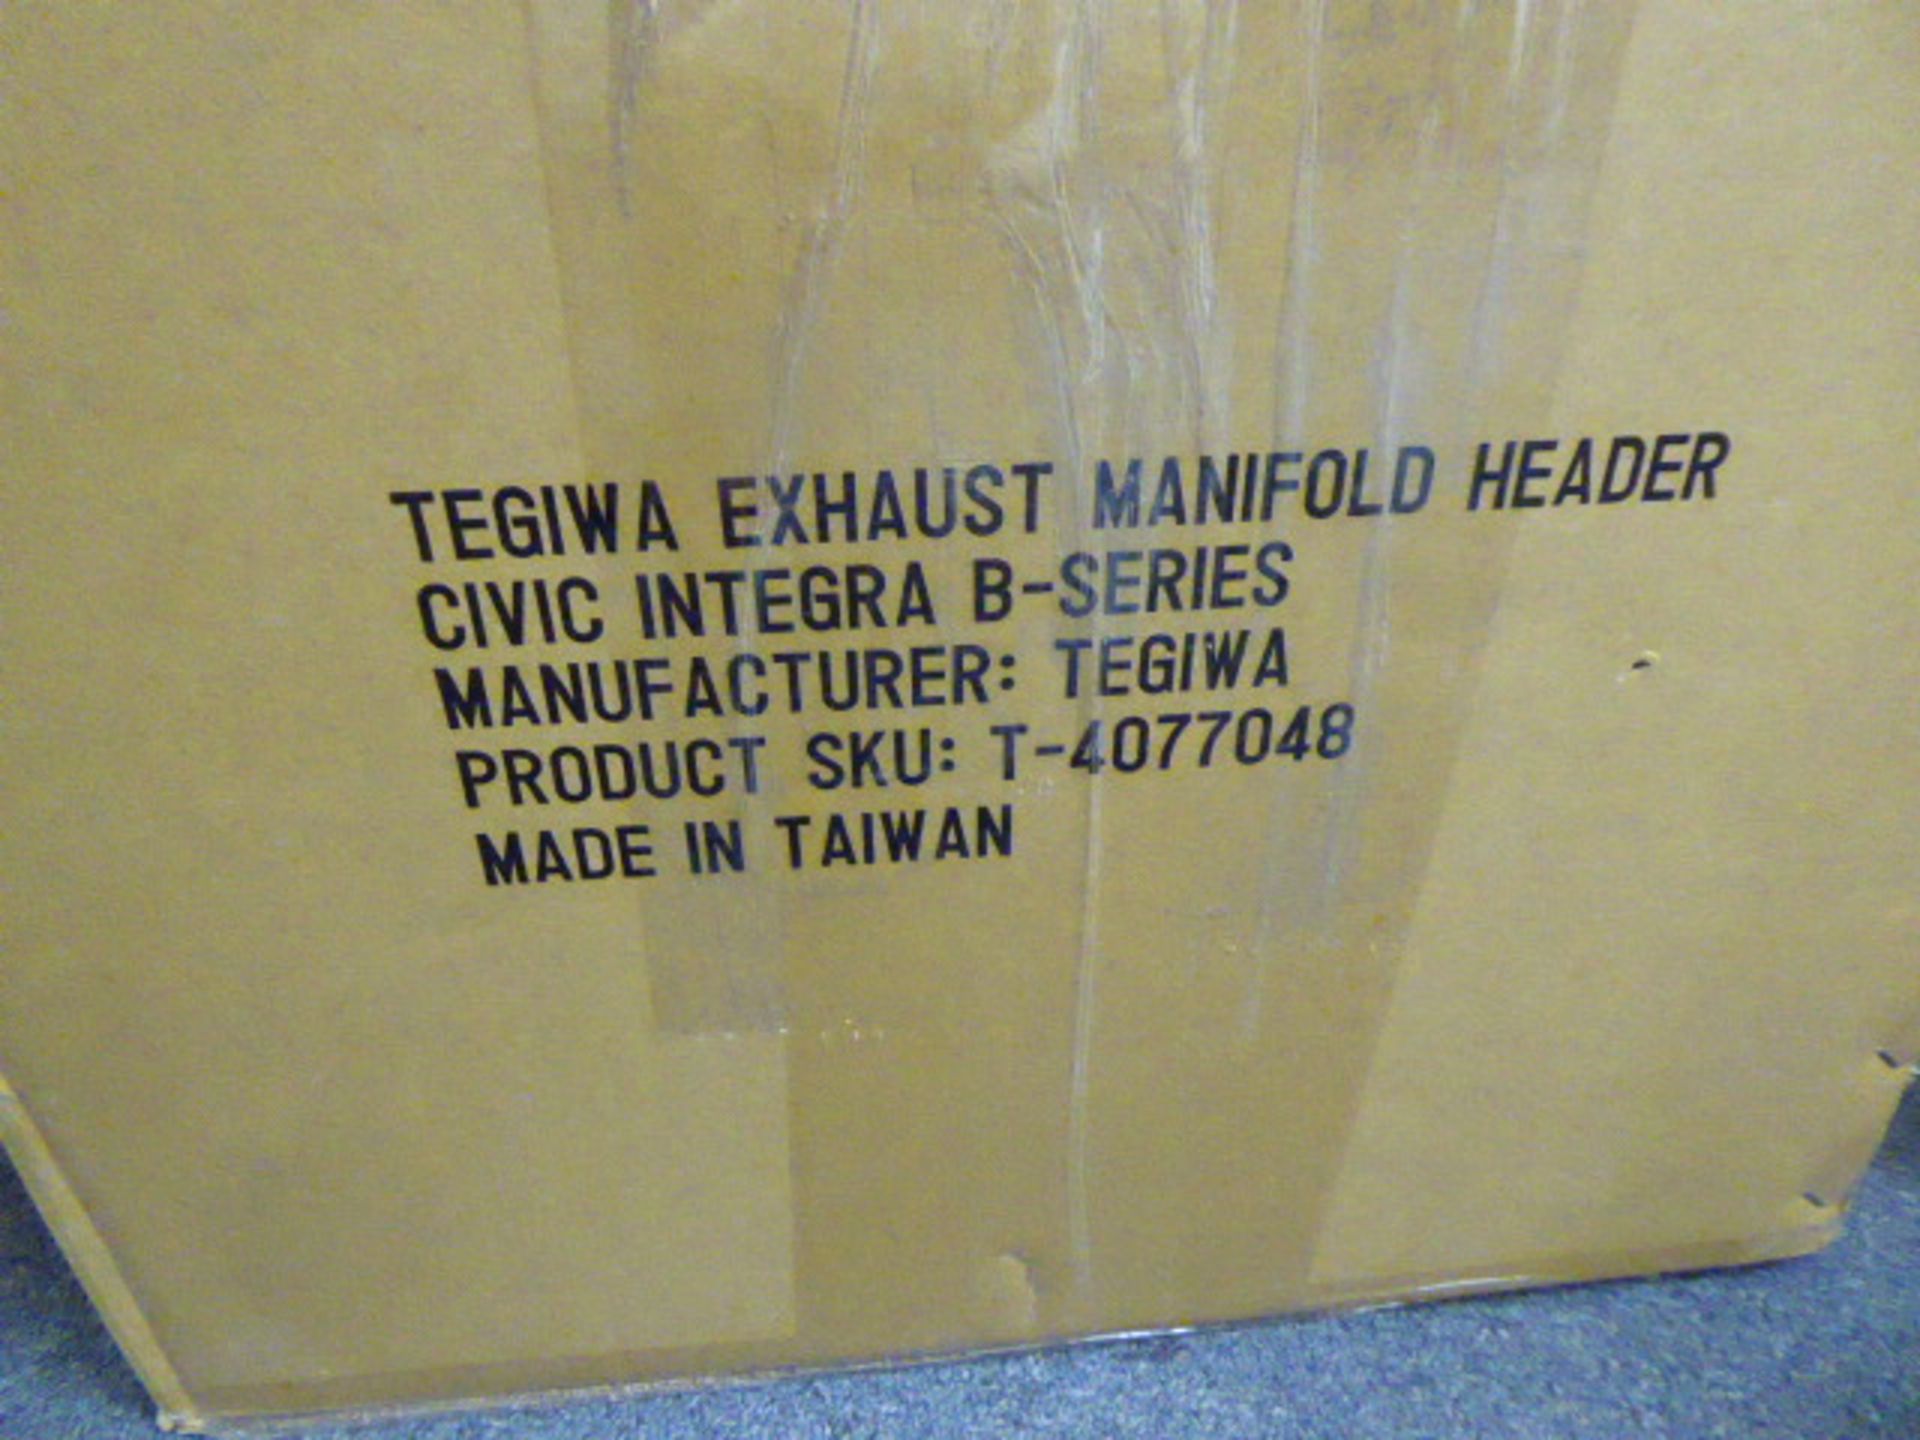 Tegiwa exhaust manifold header - Image 5 of 5